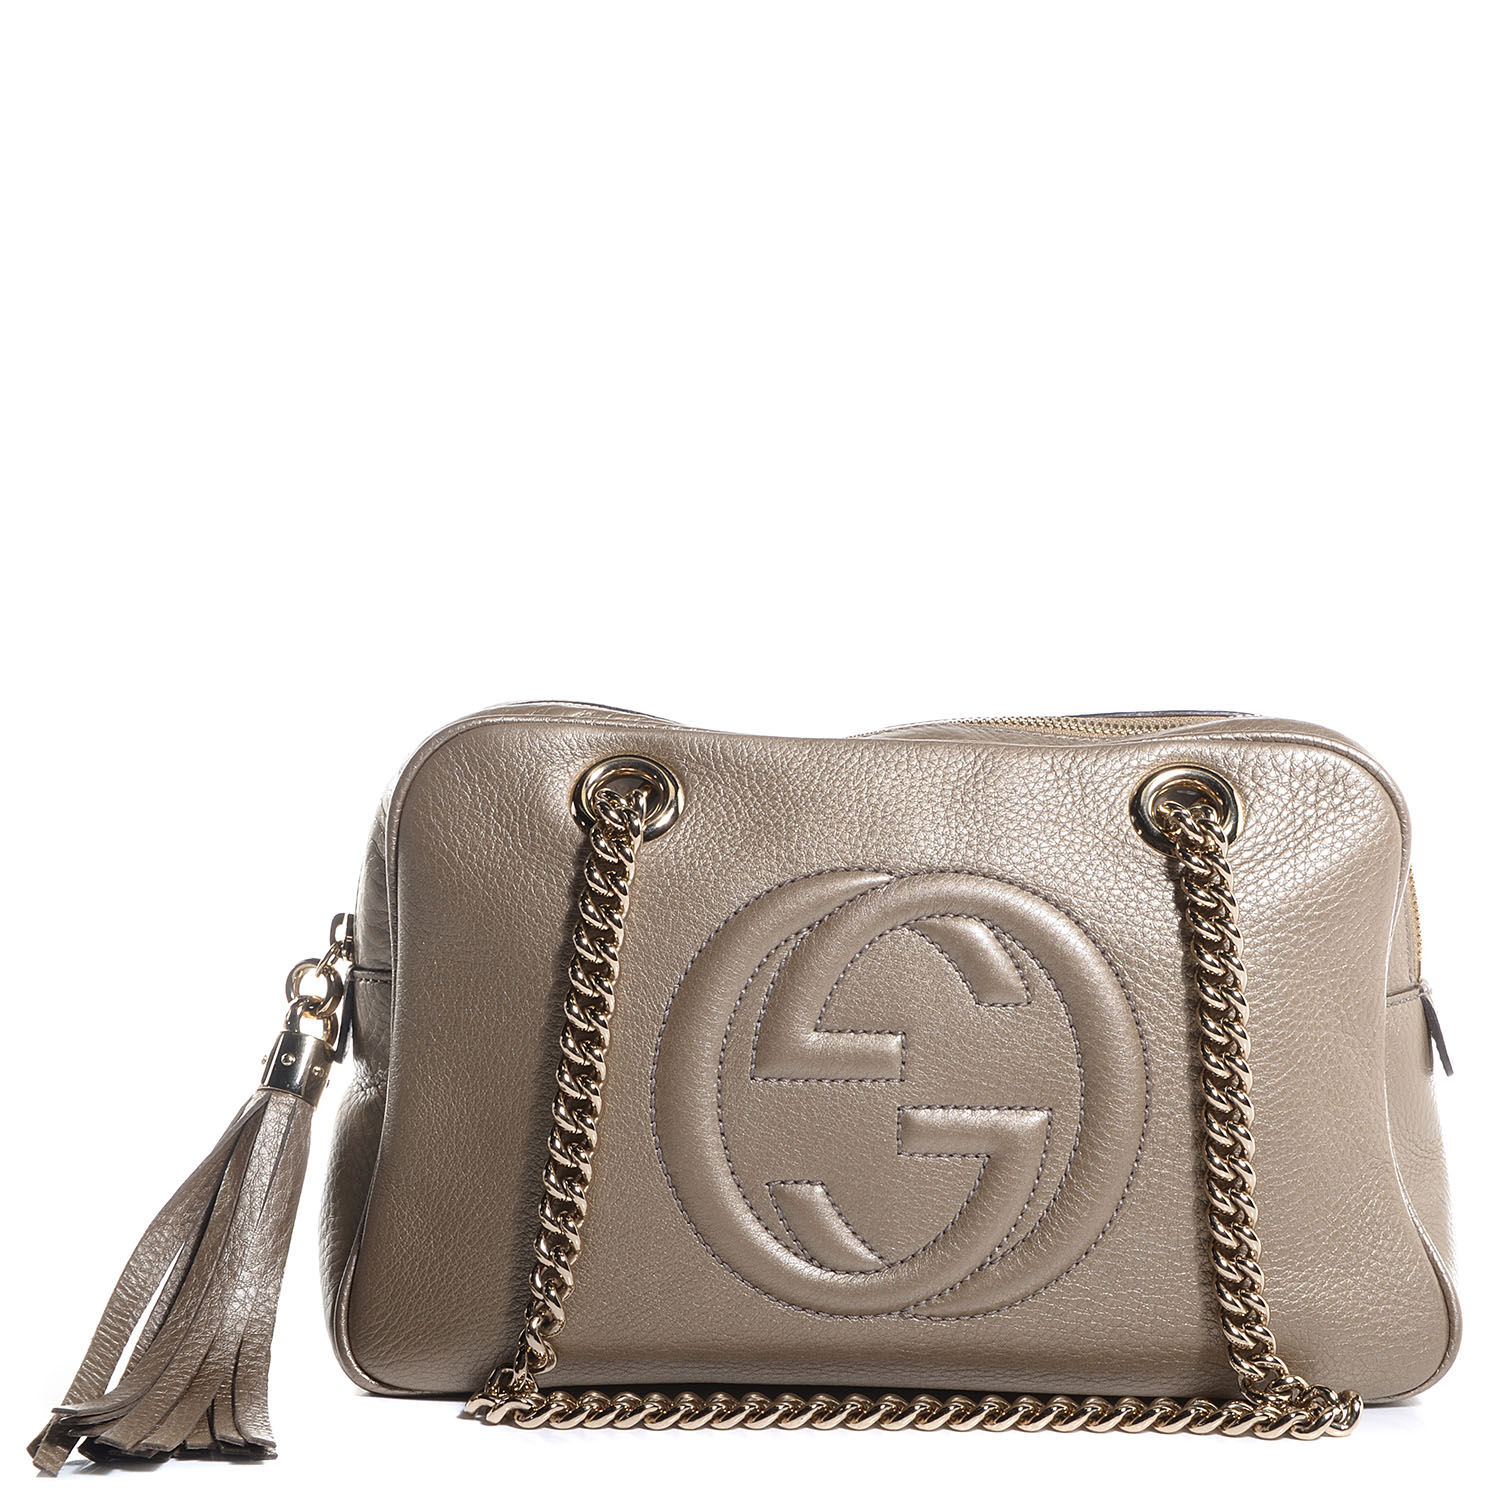 GUCCI Metallic Leather Soho Chain Small Shoulder Bag Golden Beige 87191